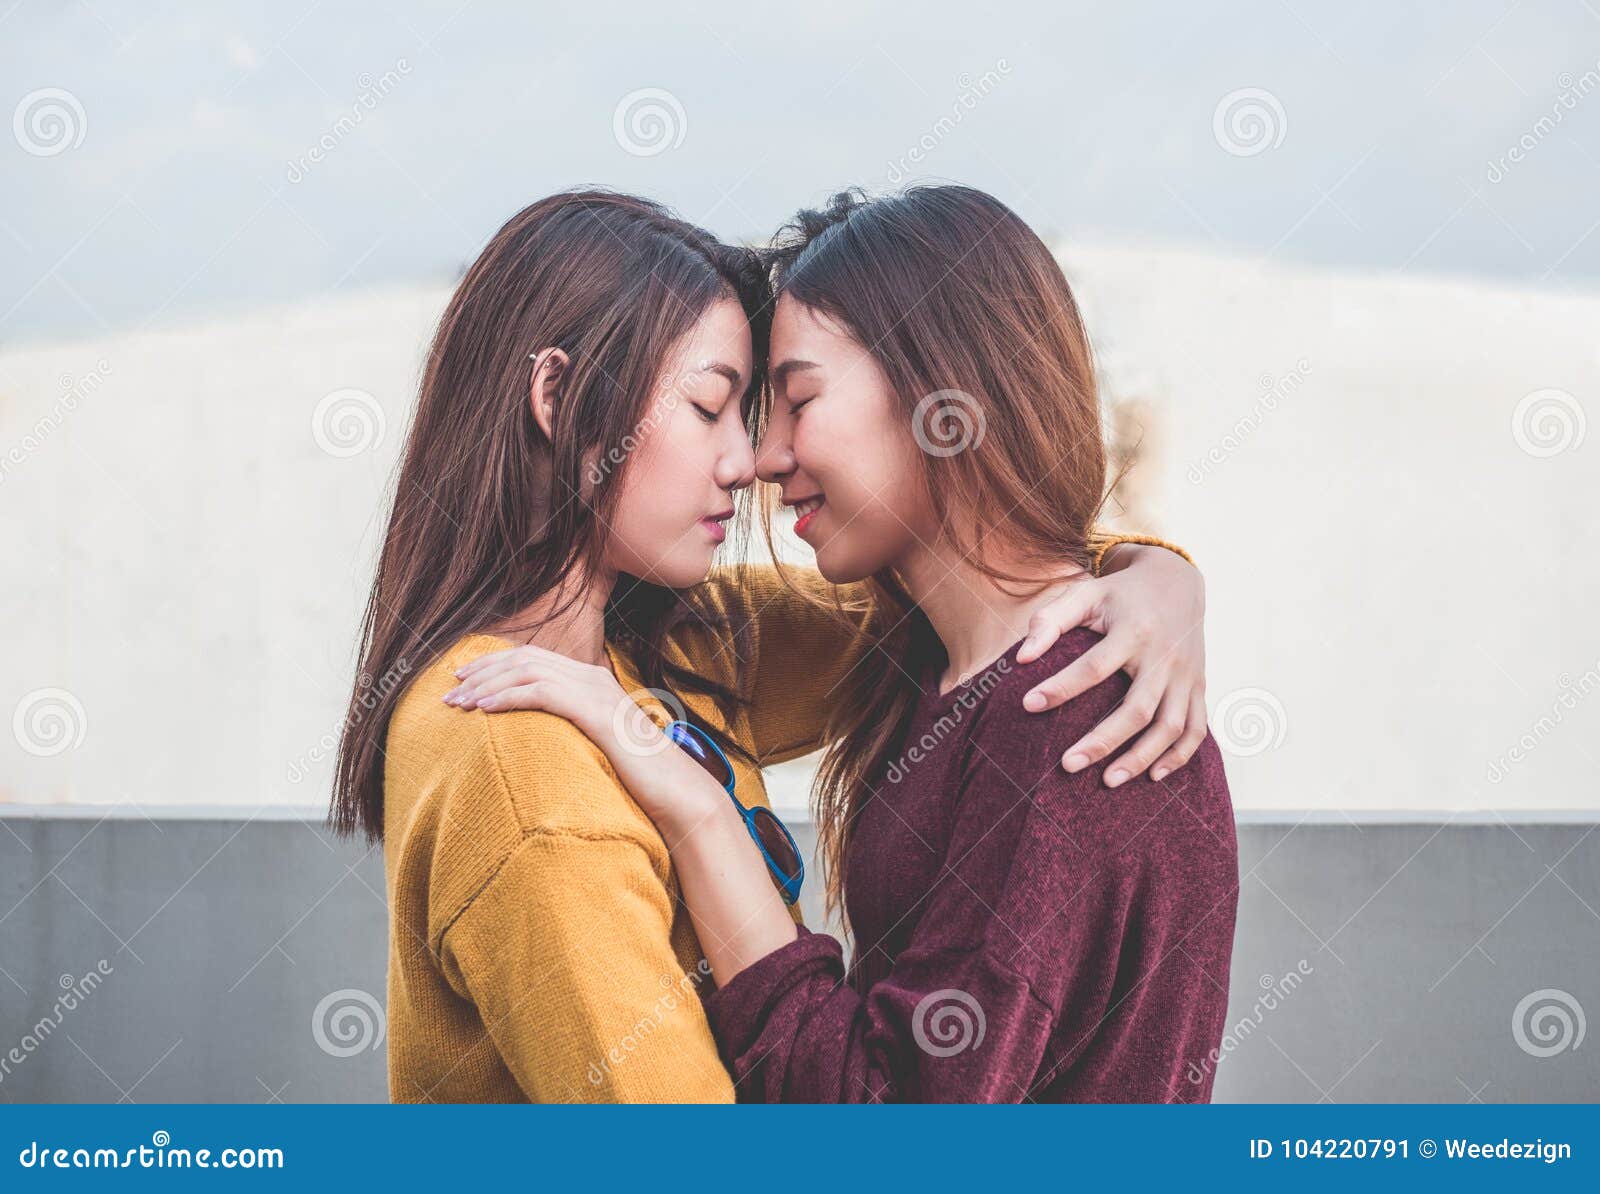 amen mendoza add photo japanese lesbian wet kiss